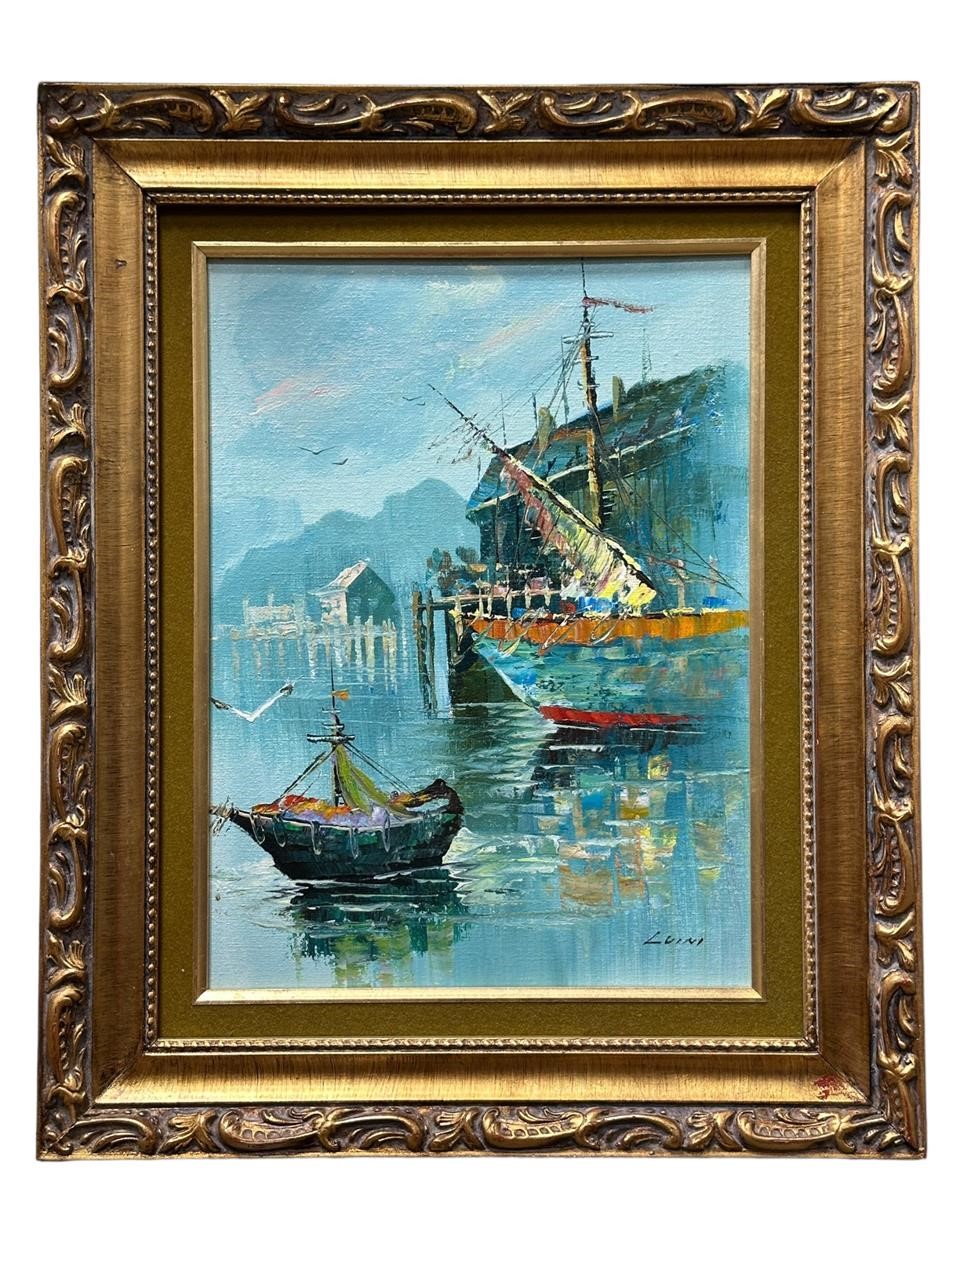 Oil on Canvas Sailboat Signed "Luini"